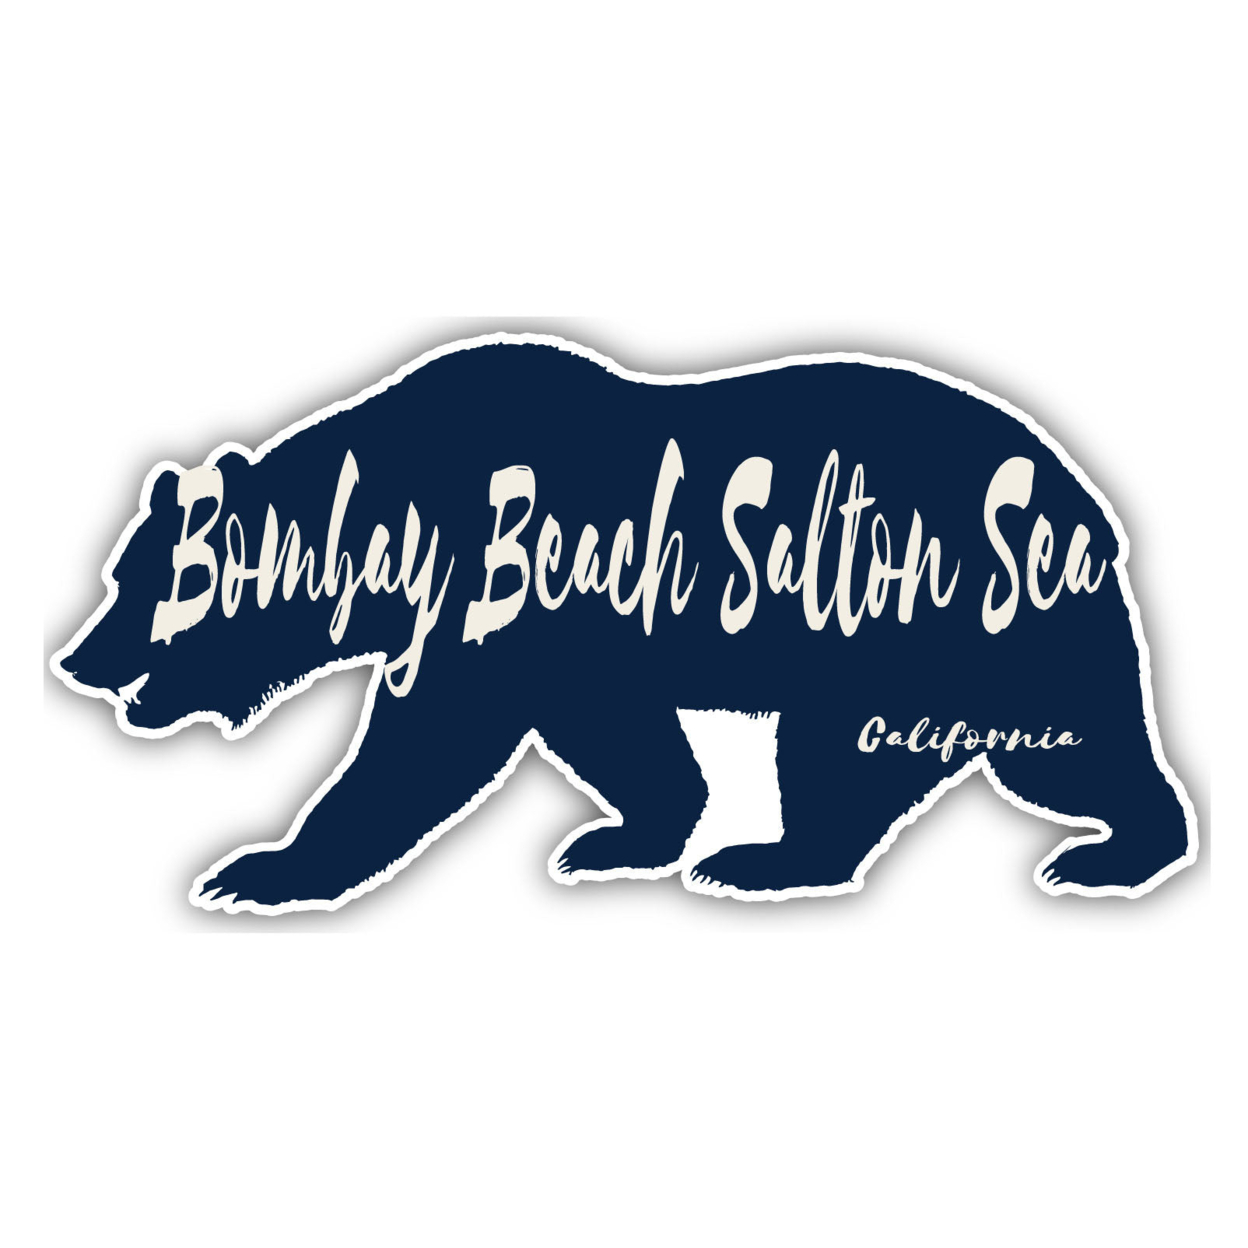 Bombay Beach Salton Sea California Souvenir Decorative Stickers (Choose Theme And Size) - Single Unit, 6-Inch, Bear